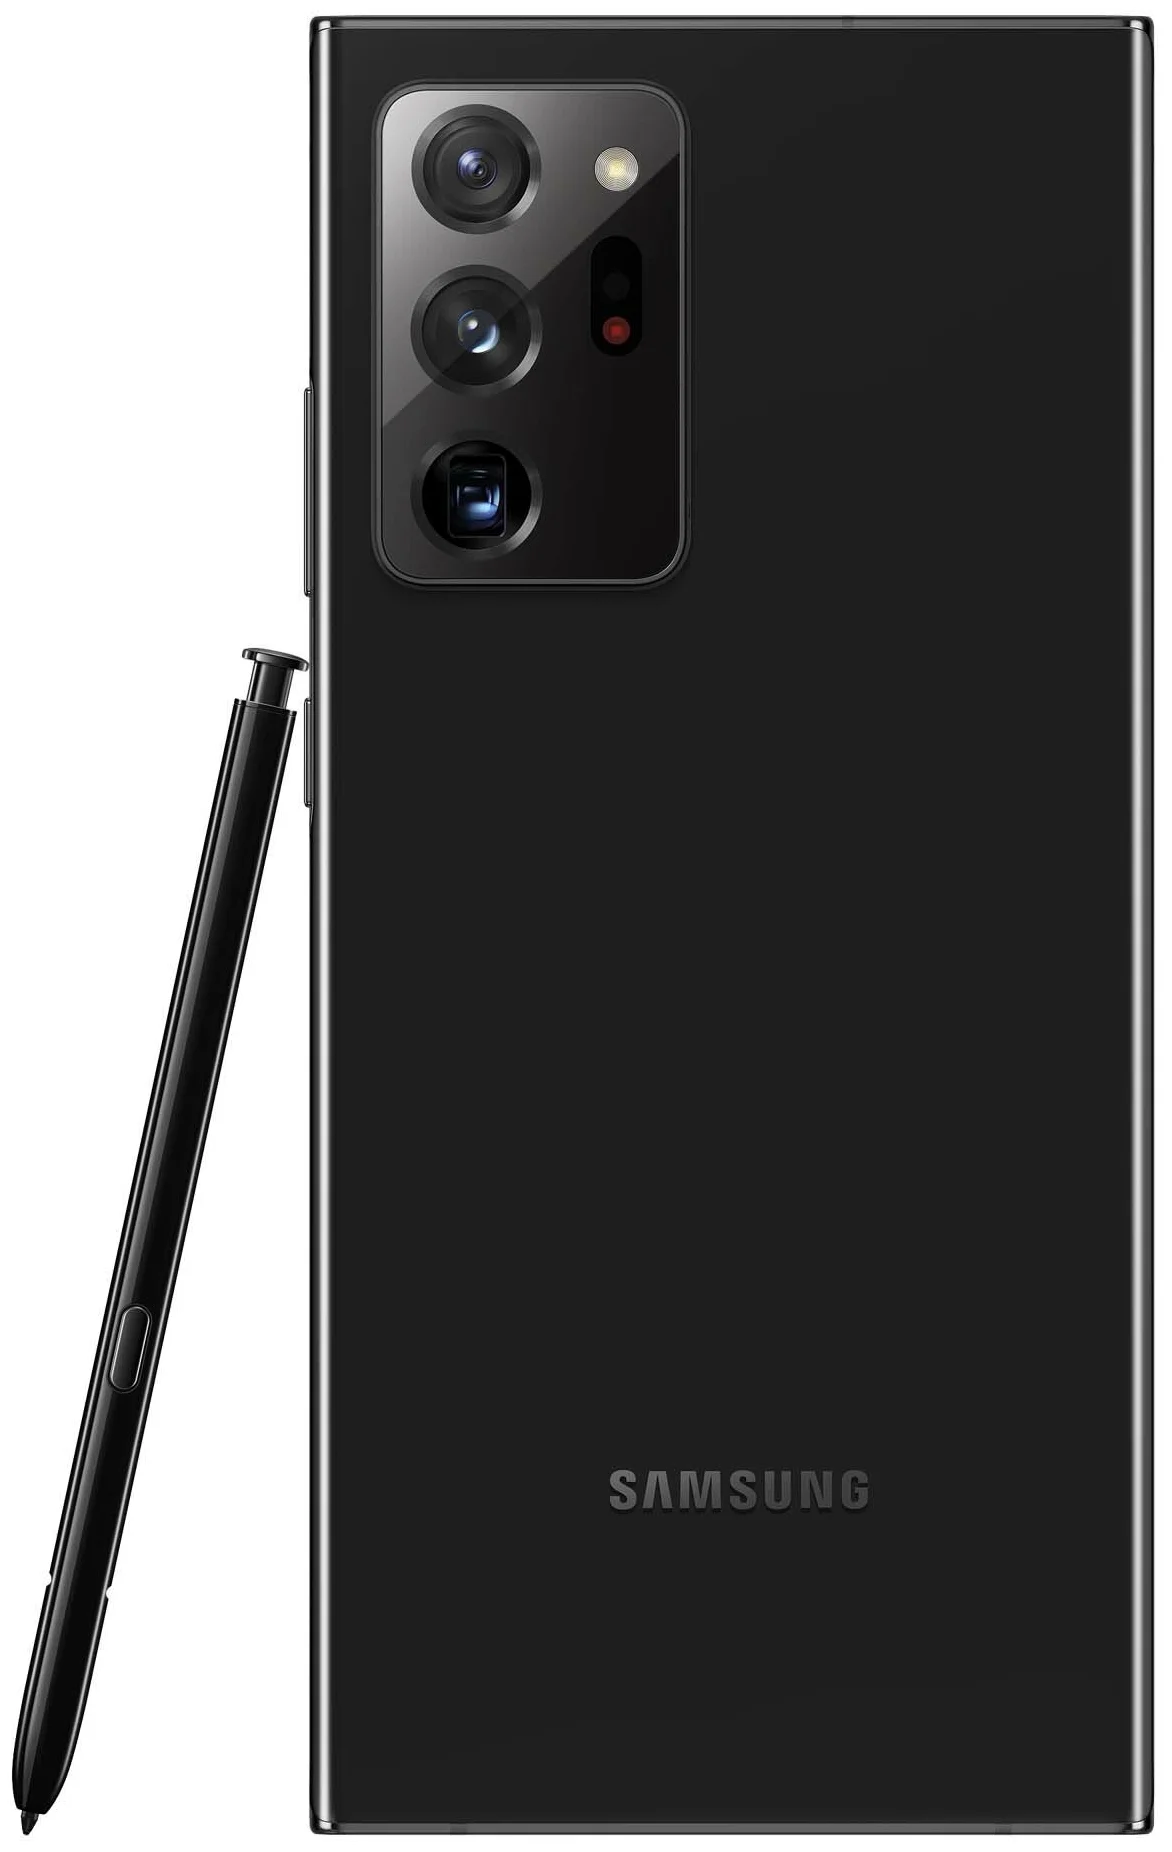 Samsung Galaxy Note 20 Ultra (SM-N985F) - степень защиты: IP68